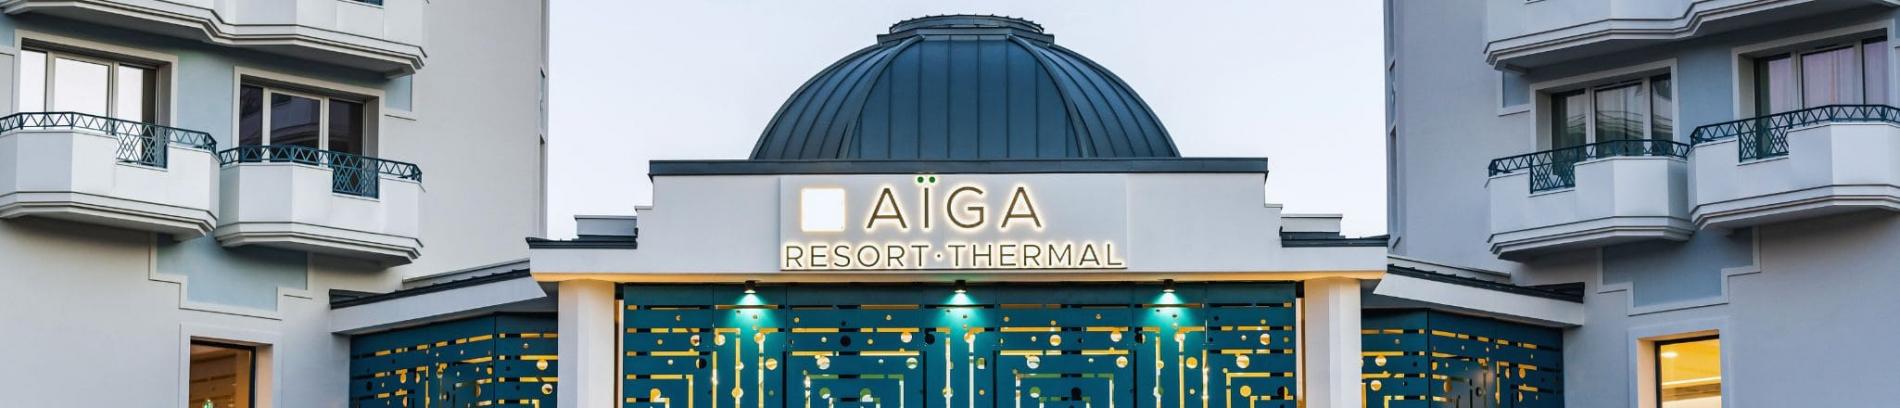 Slide Résidence Aïga Resort Thermal à Châtel Guyon - Résidence et soins naturels